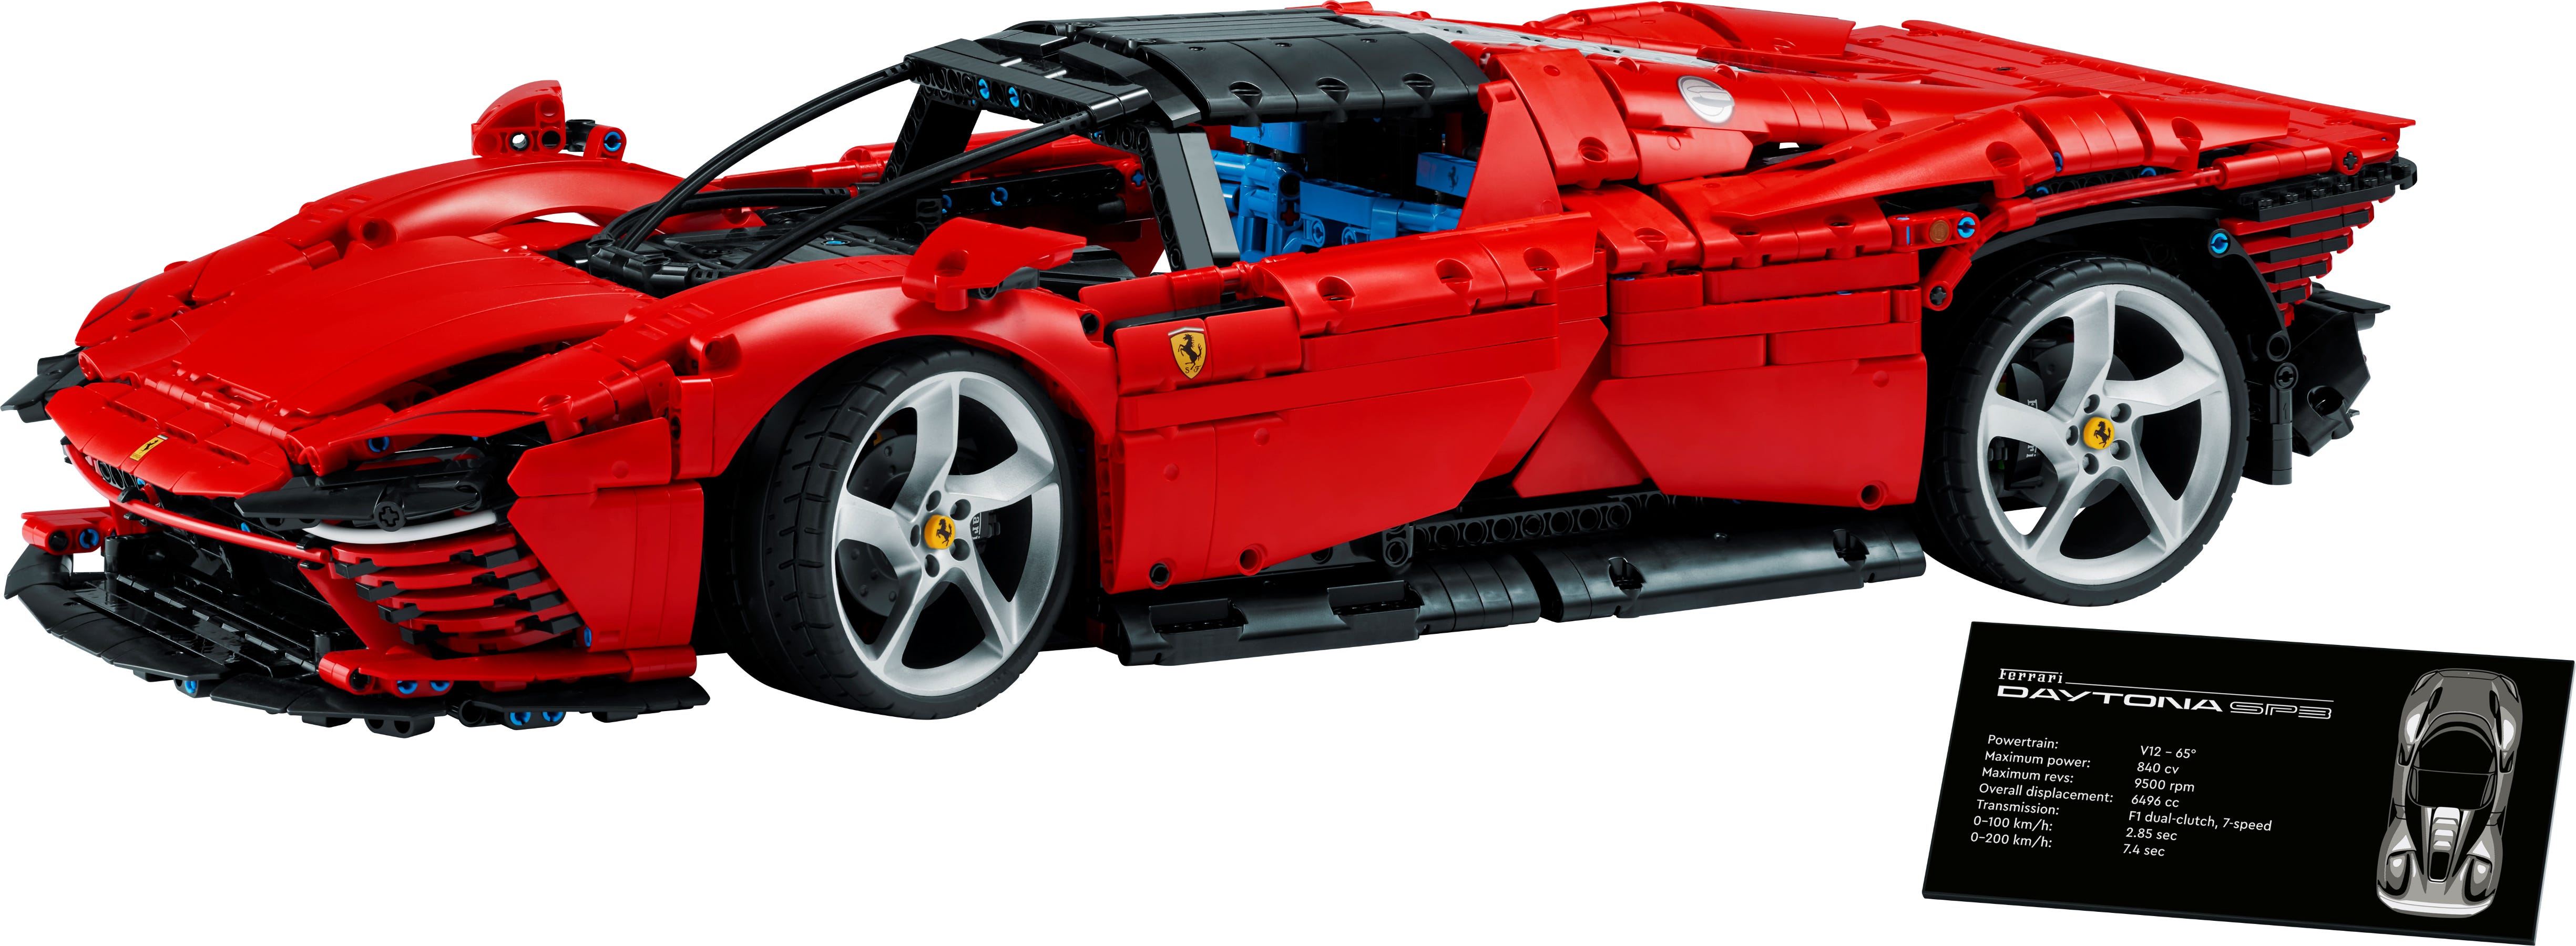 Image of Ferrari Daytona SP3